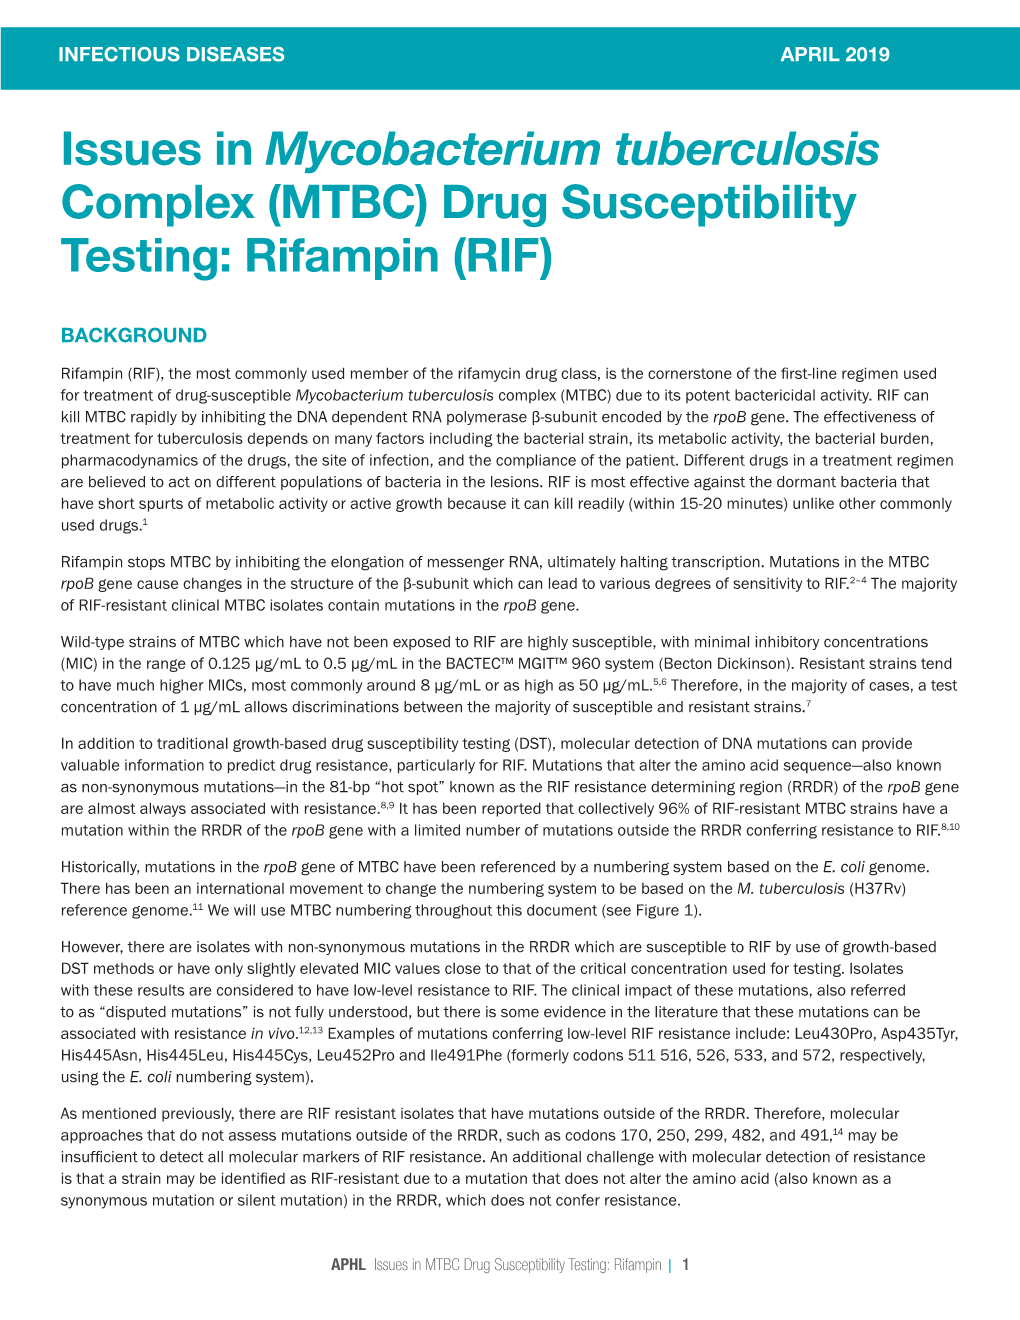 MTBC) Drug Susceptibility Testing: Rifampin (RIF